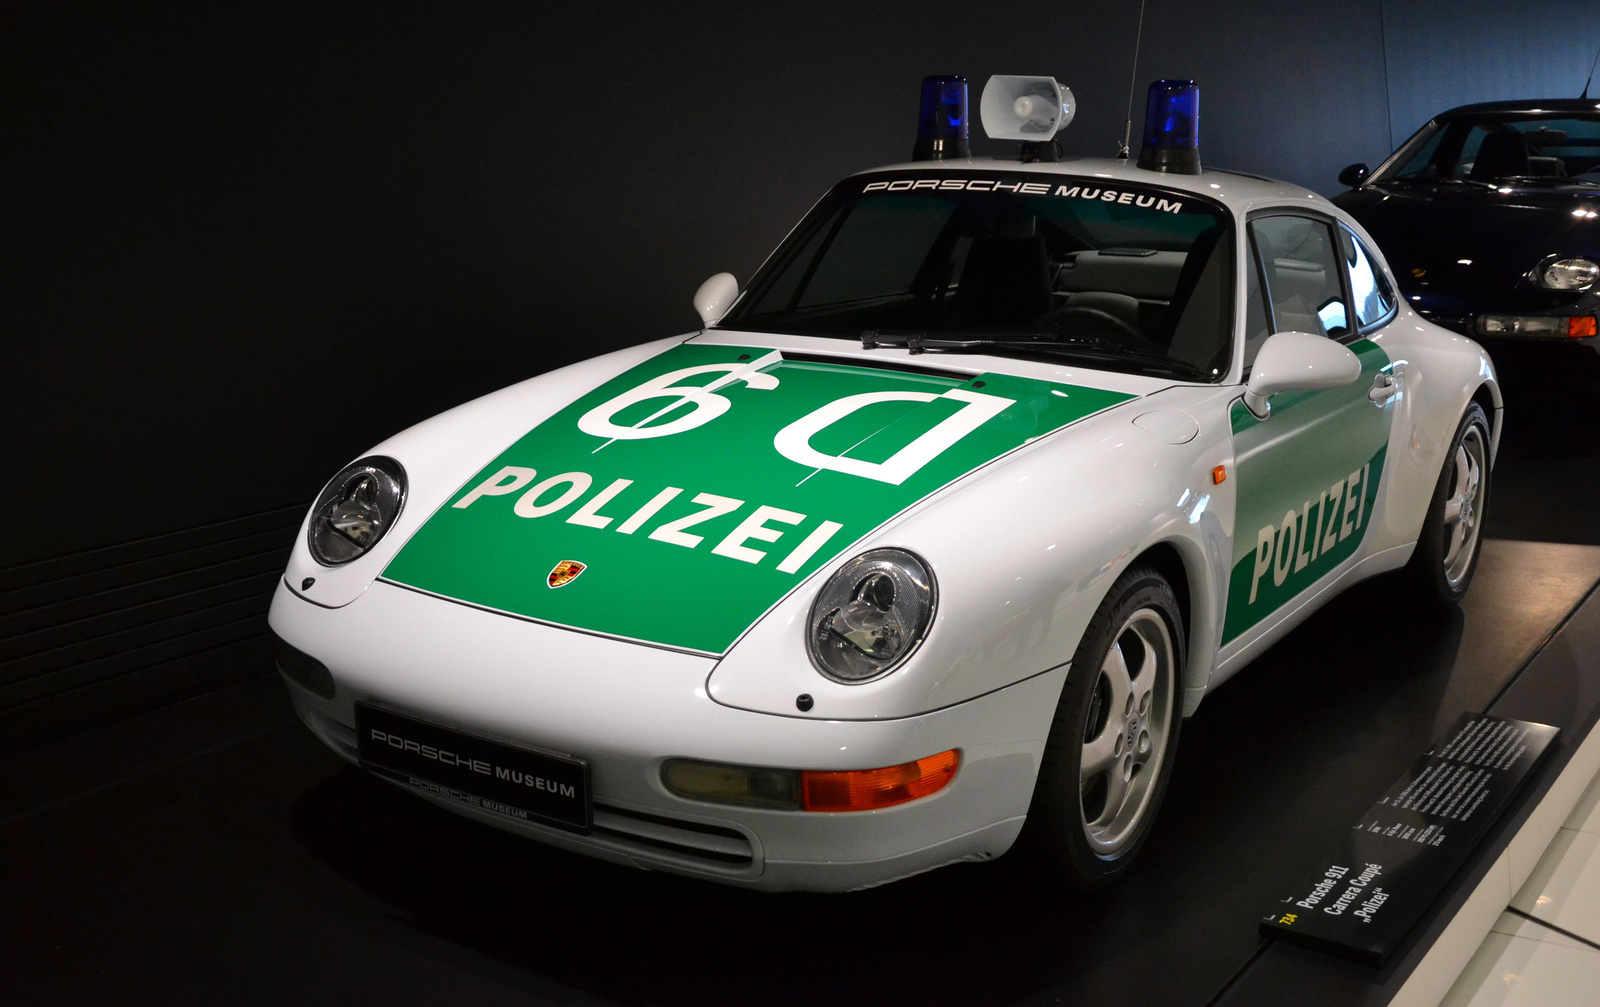 Porsche 911 Carrera Polizei